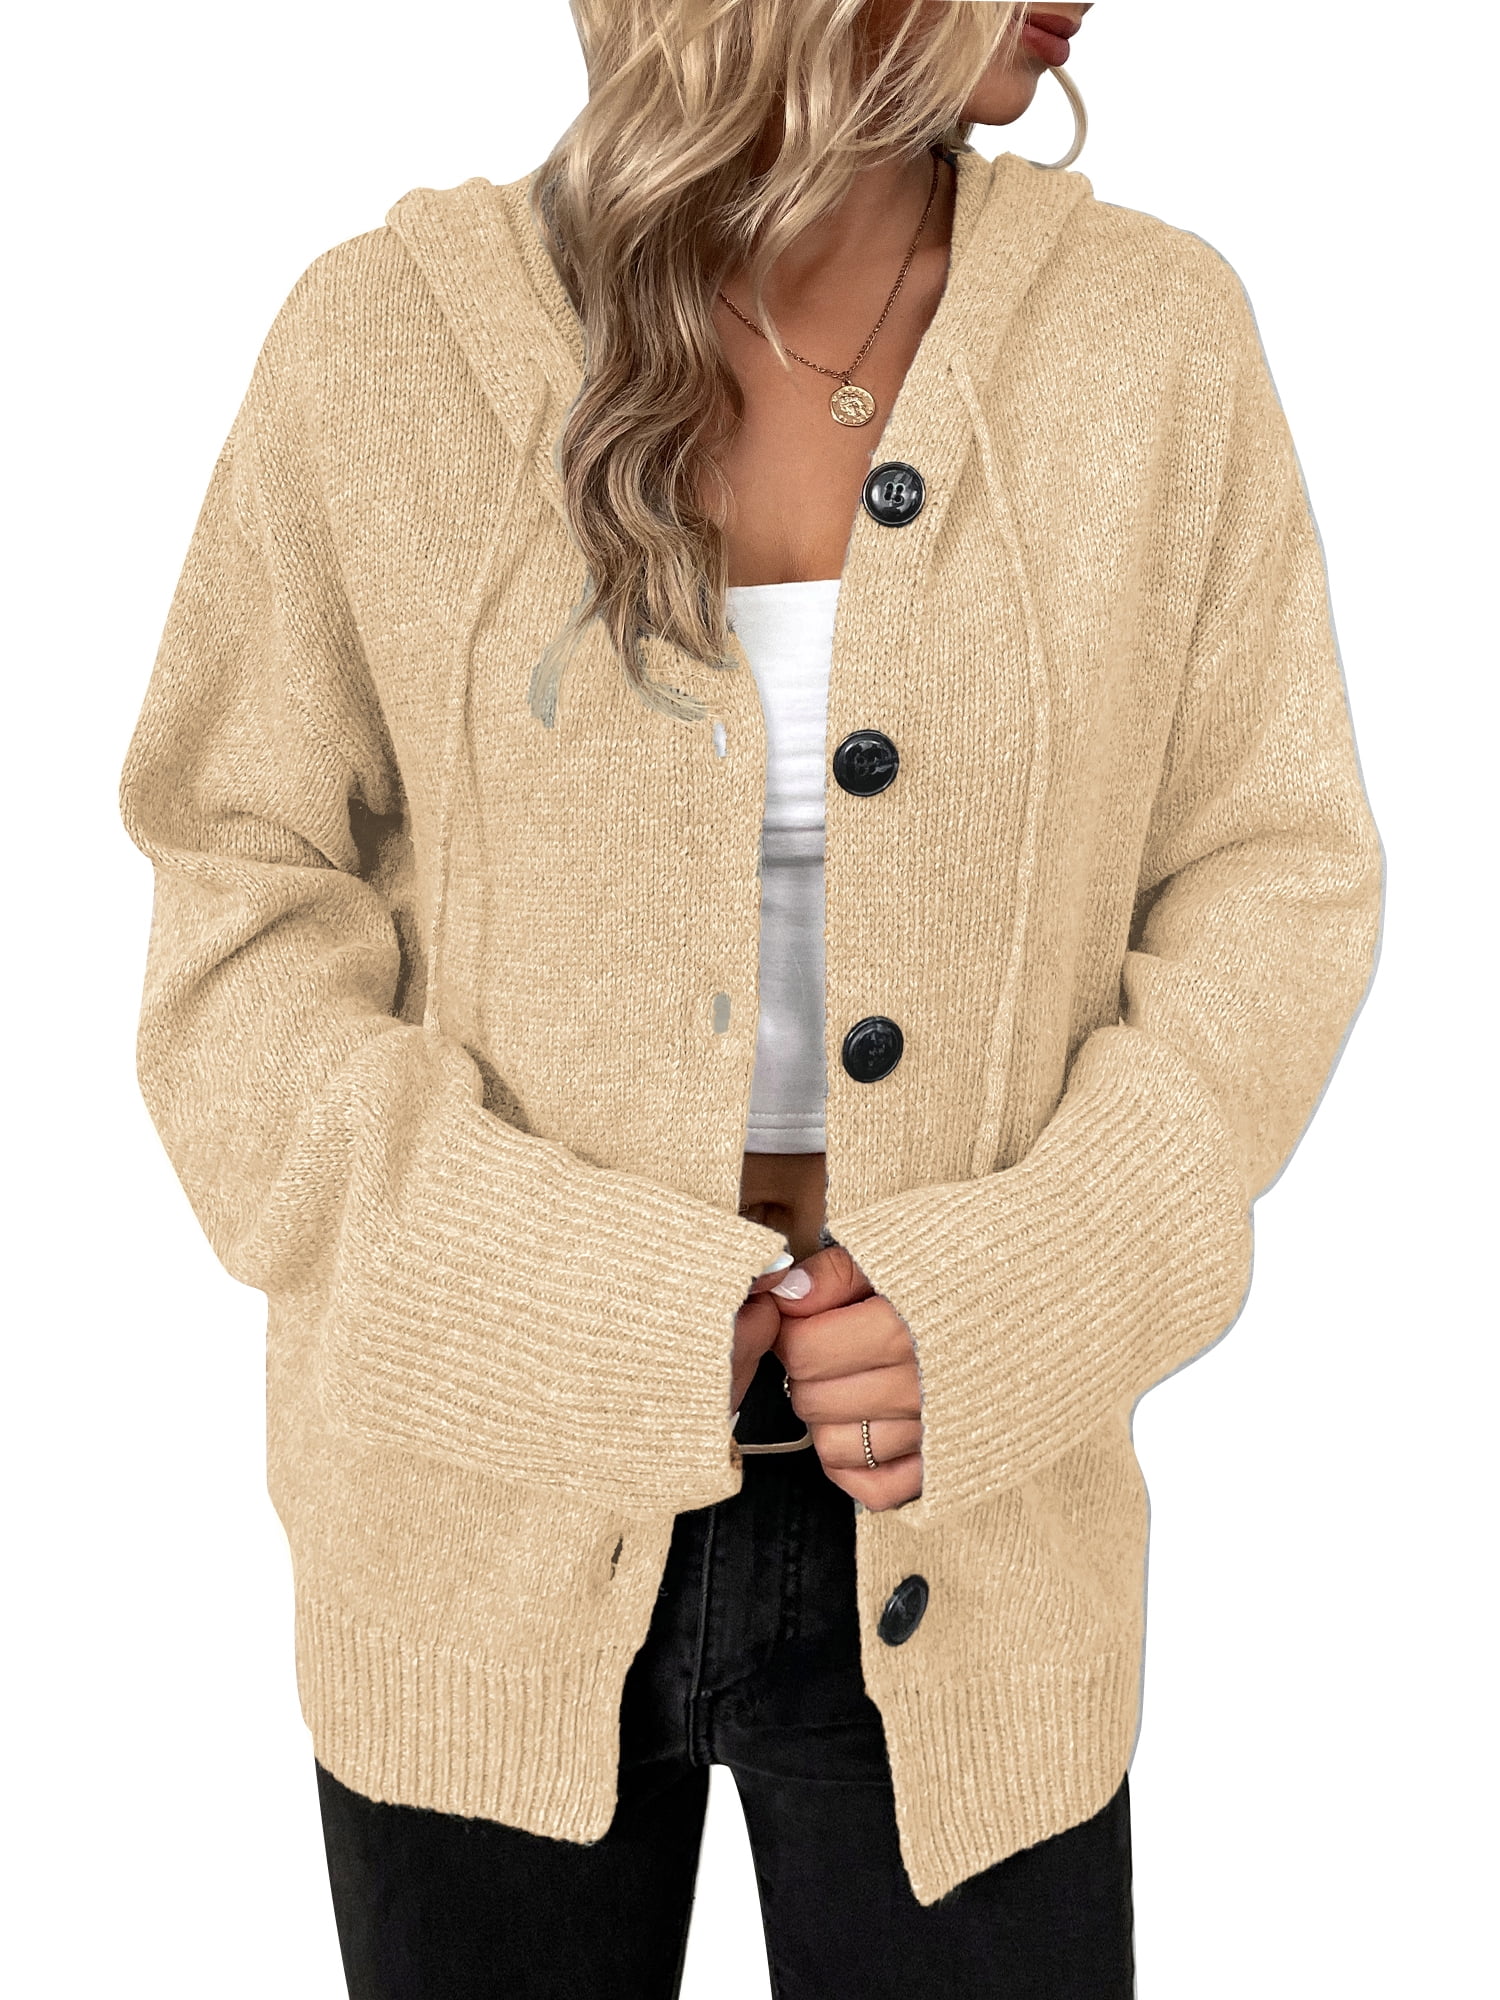 Ecetana Cardigans for Women Long Sleeve Knit Hooded Sweater Coat Female ...